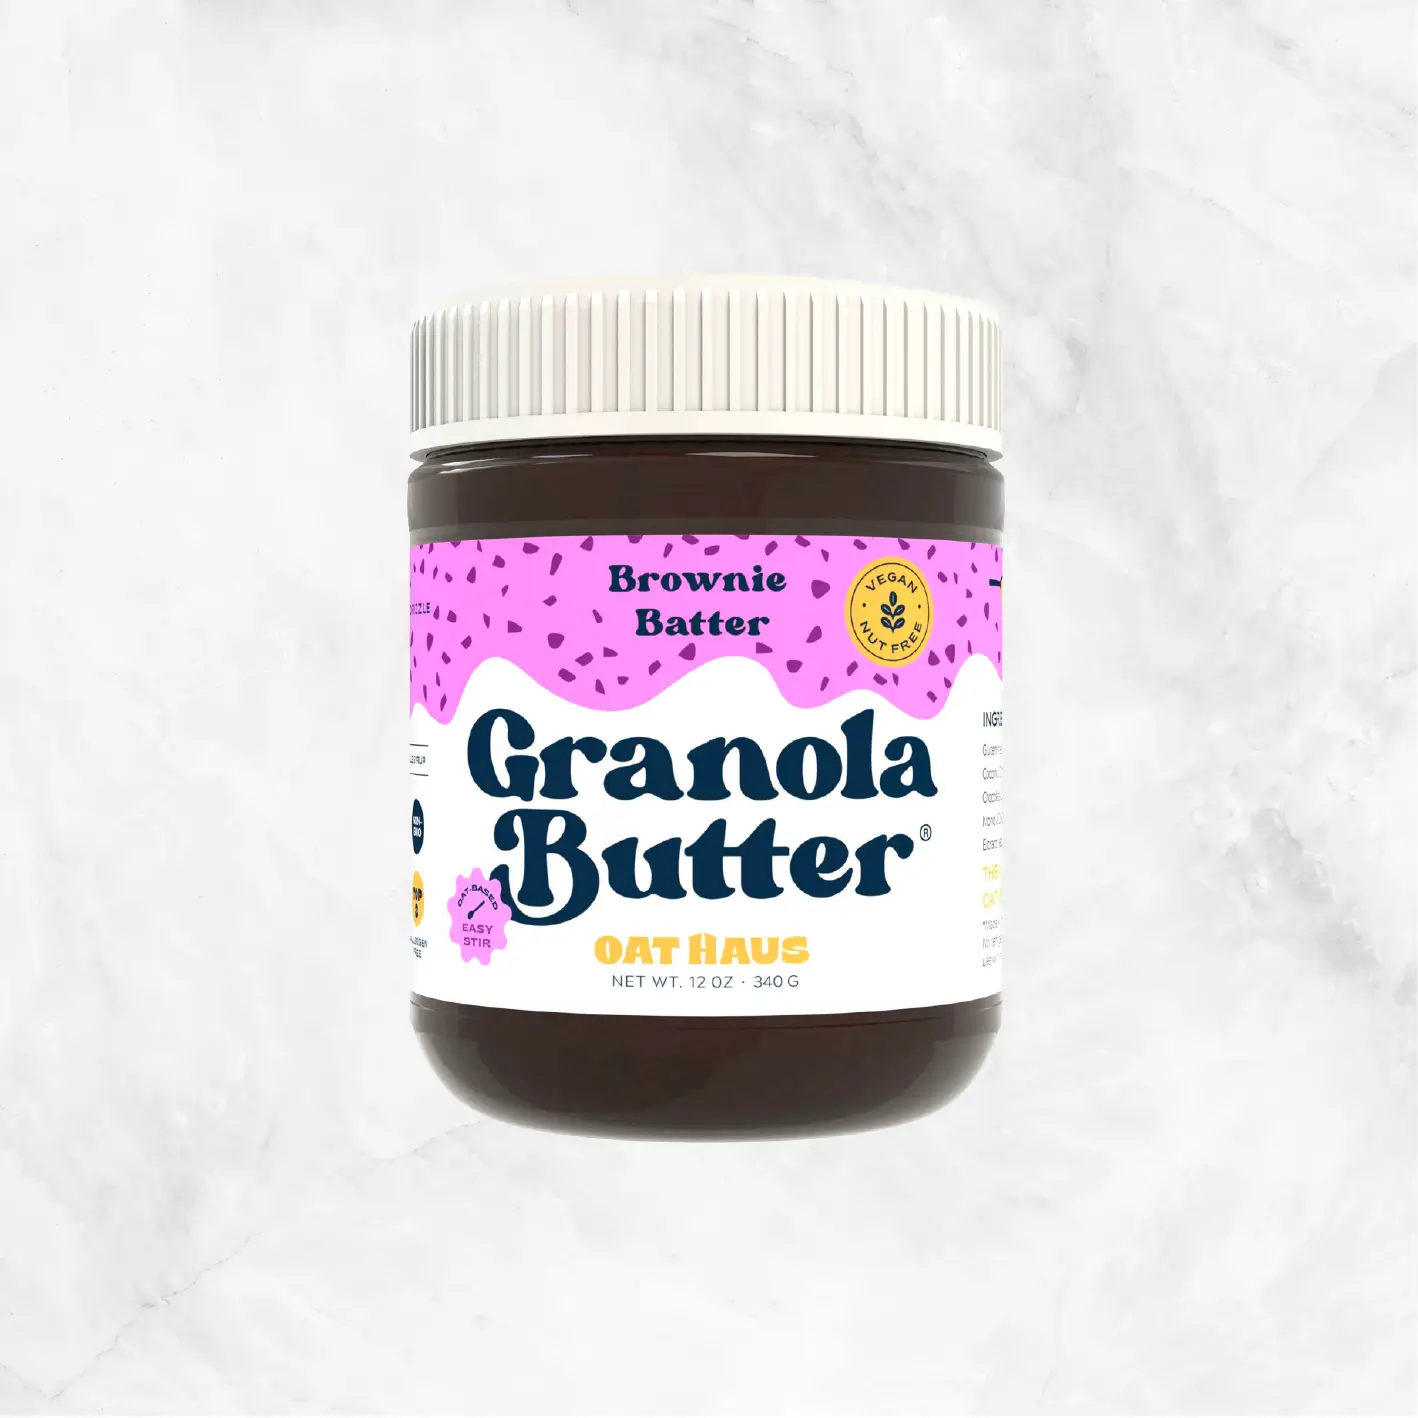 Easy Stir Brownie Batter Granola Butter Delivery